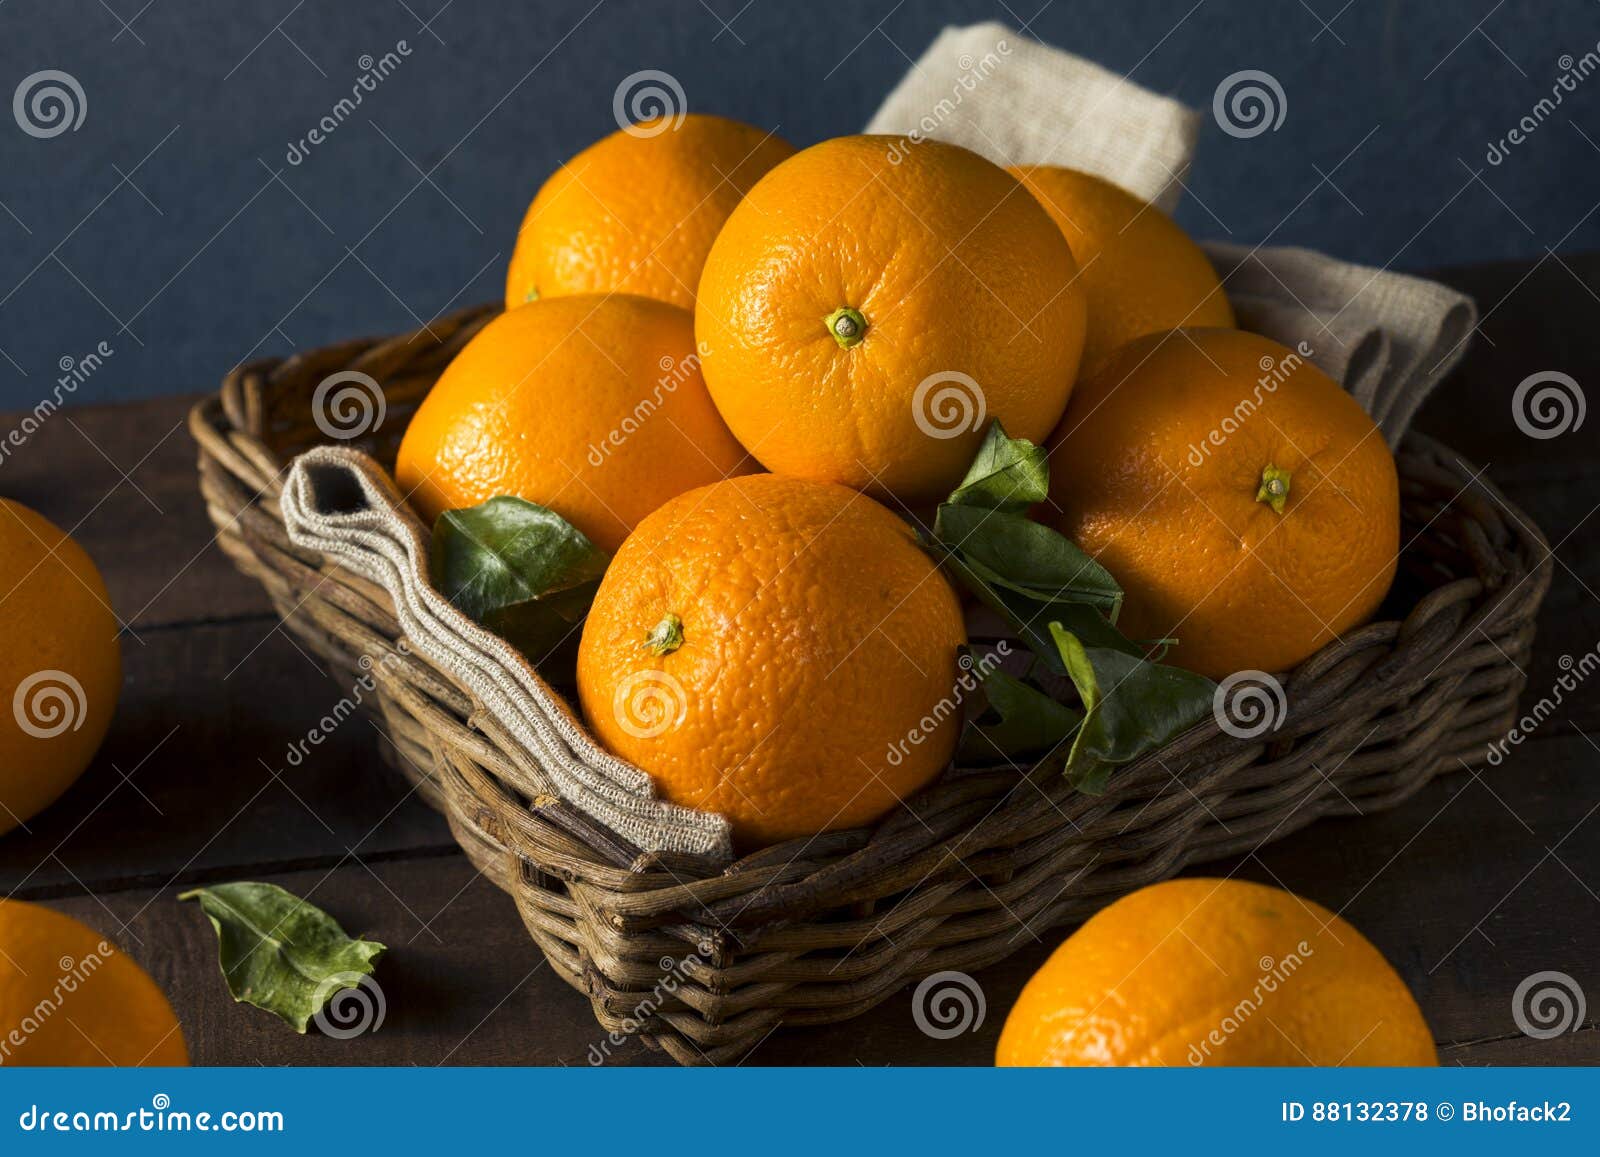 raw organic cara oranges